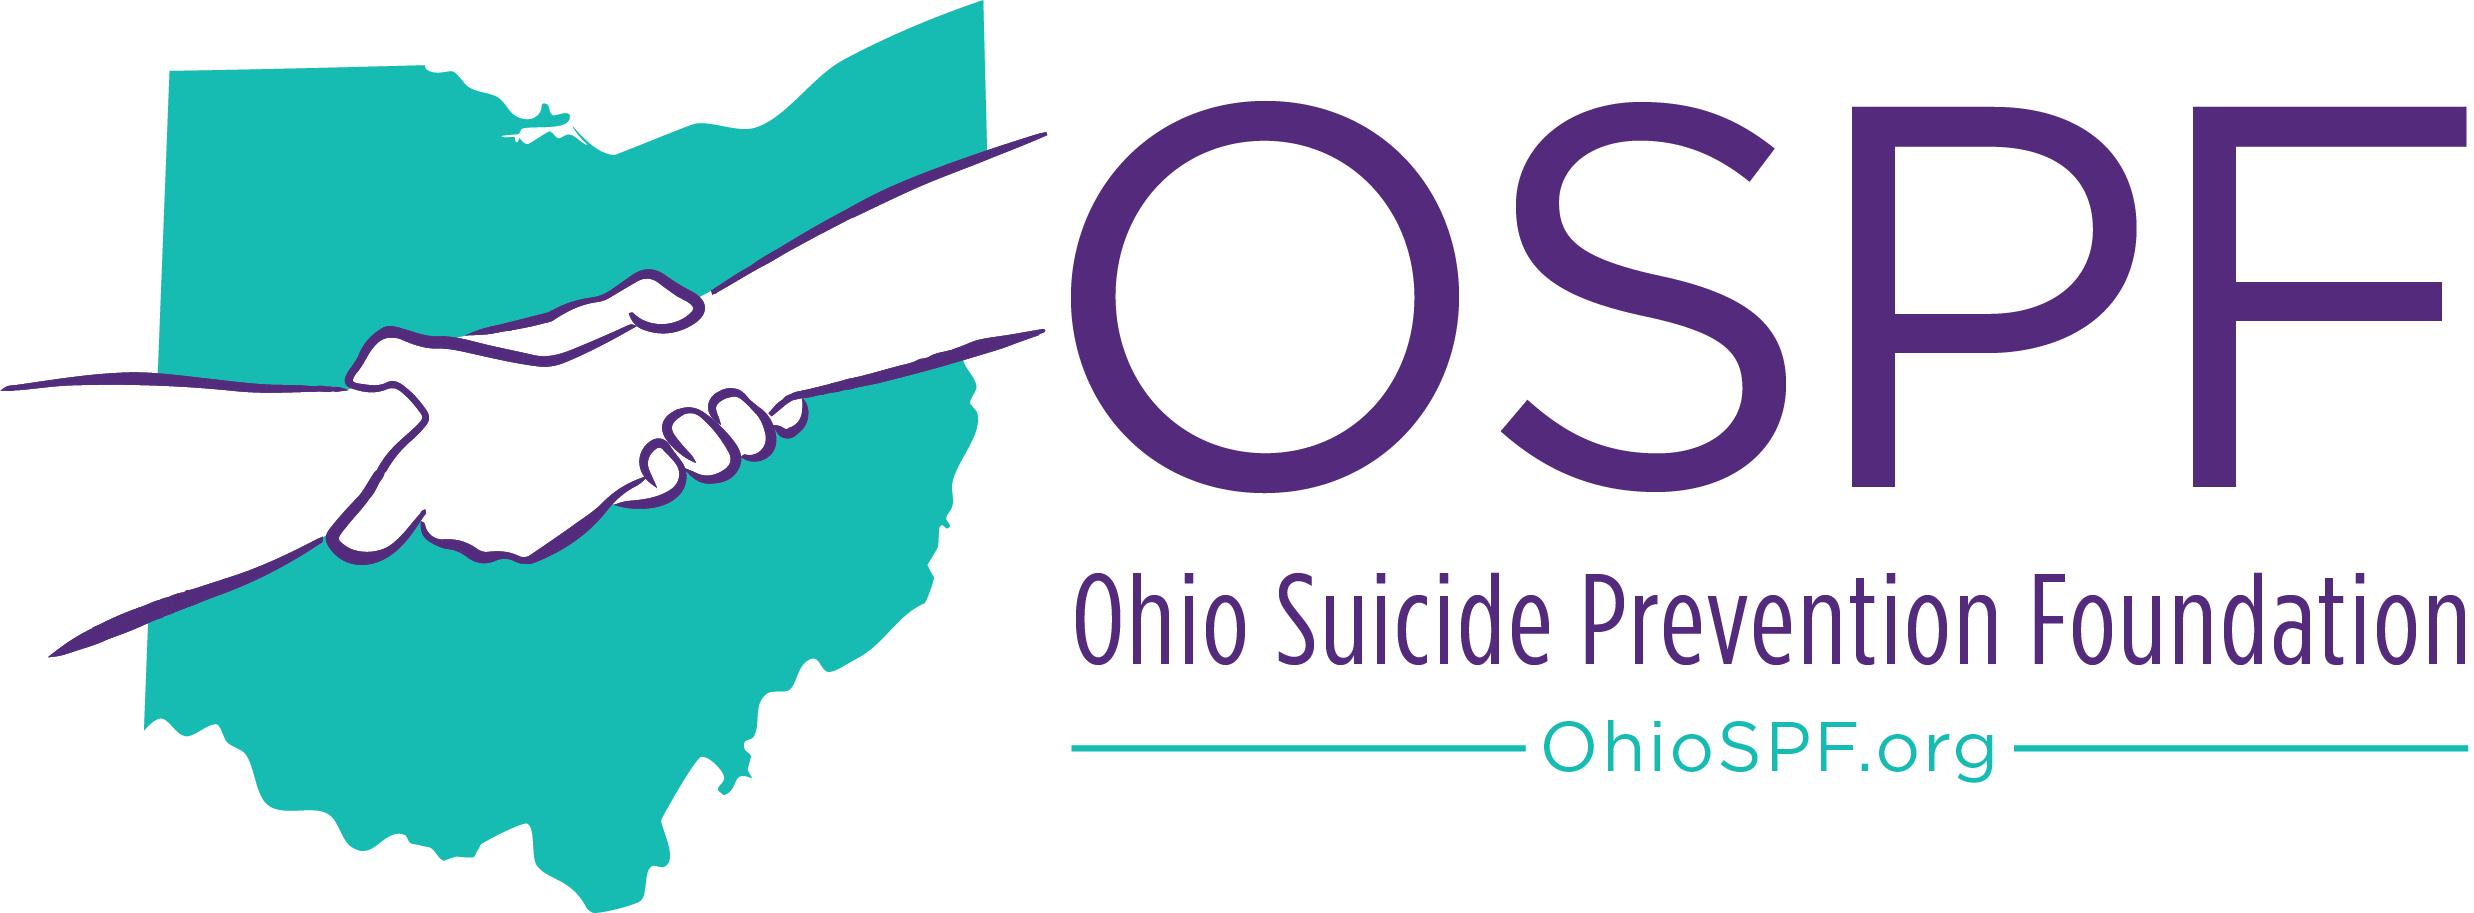 Prevention Logo - Ohio Suicide Prevention Foundation